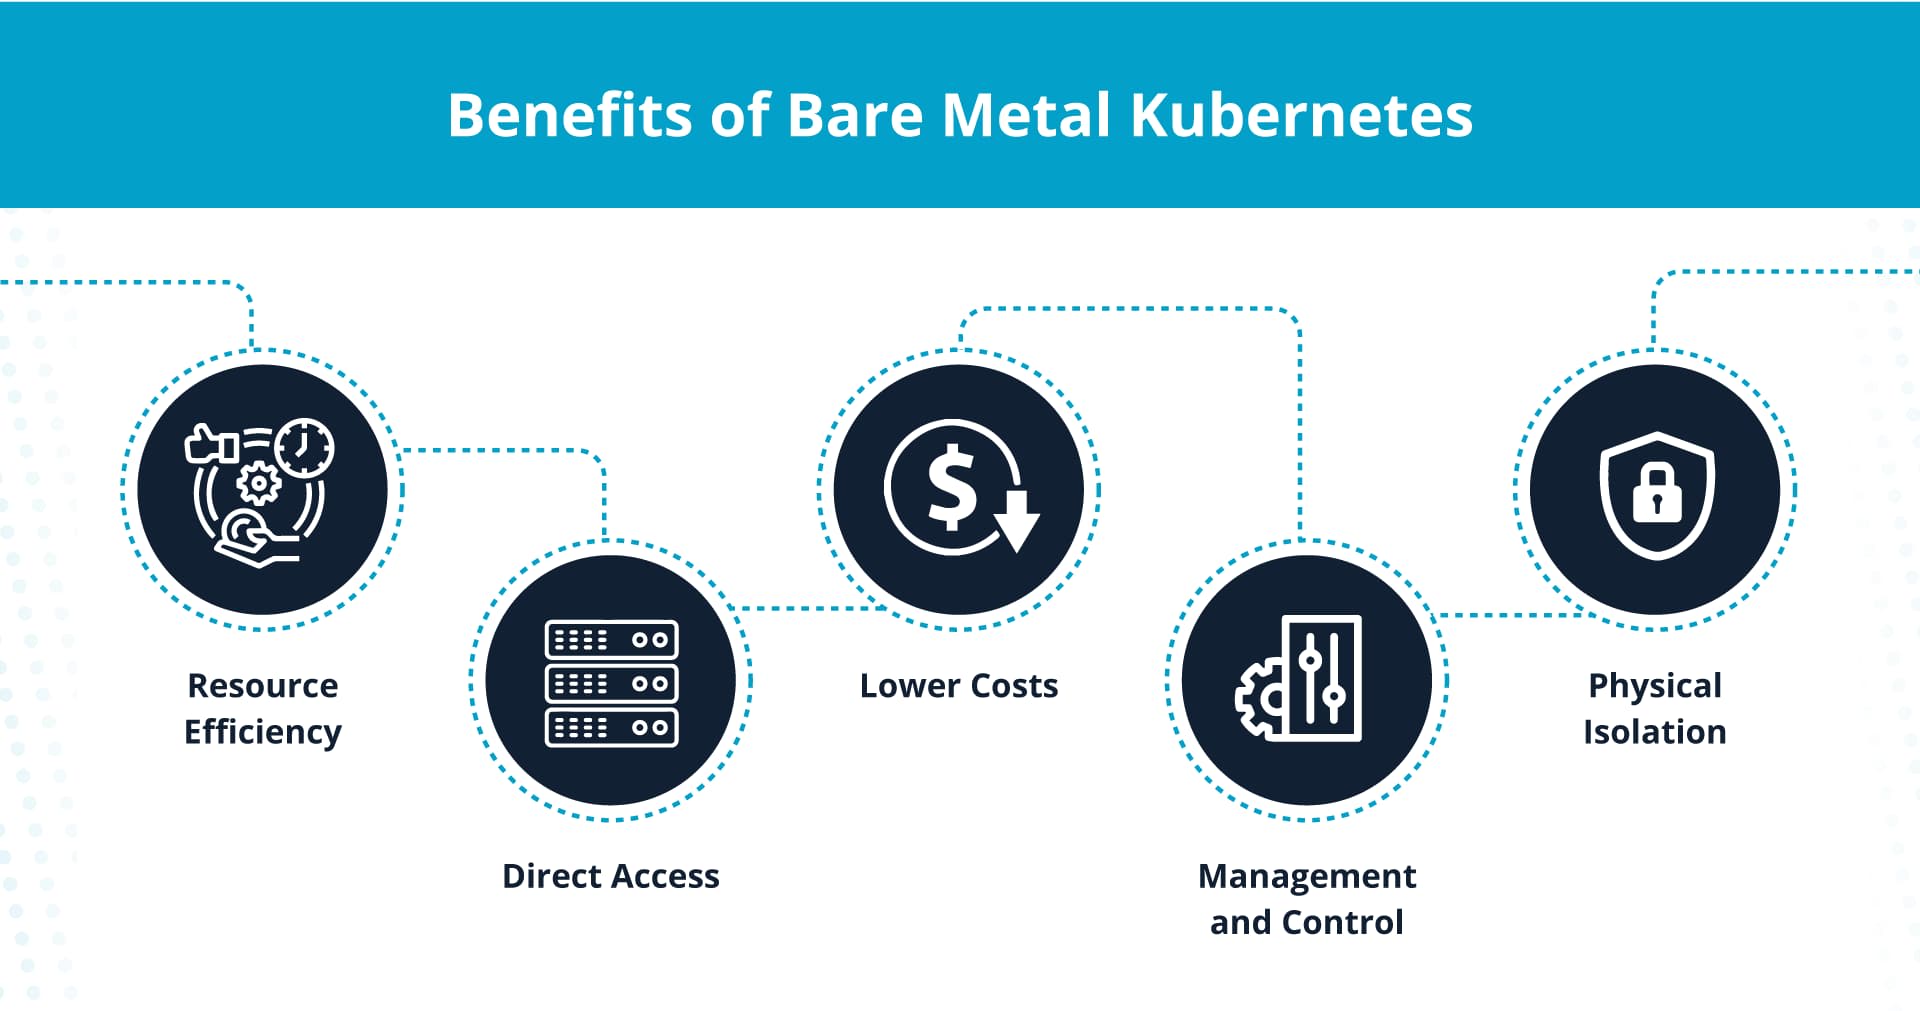 Deploying bare metal Kubernetes offers many benefits.